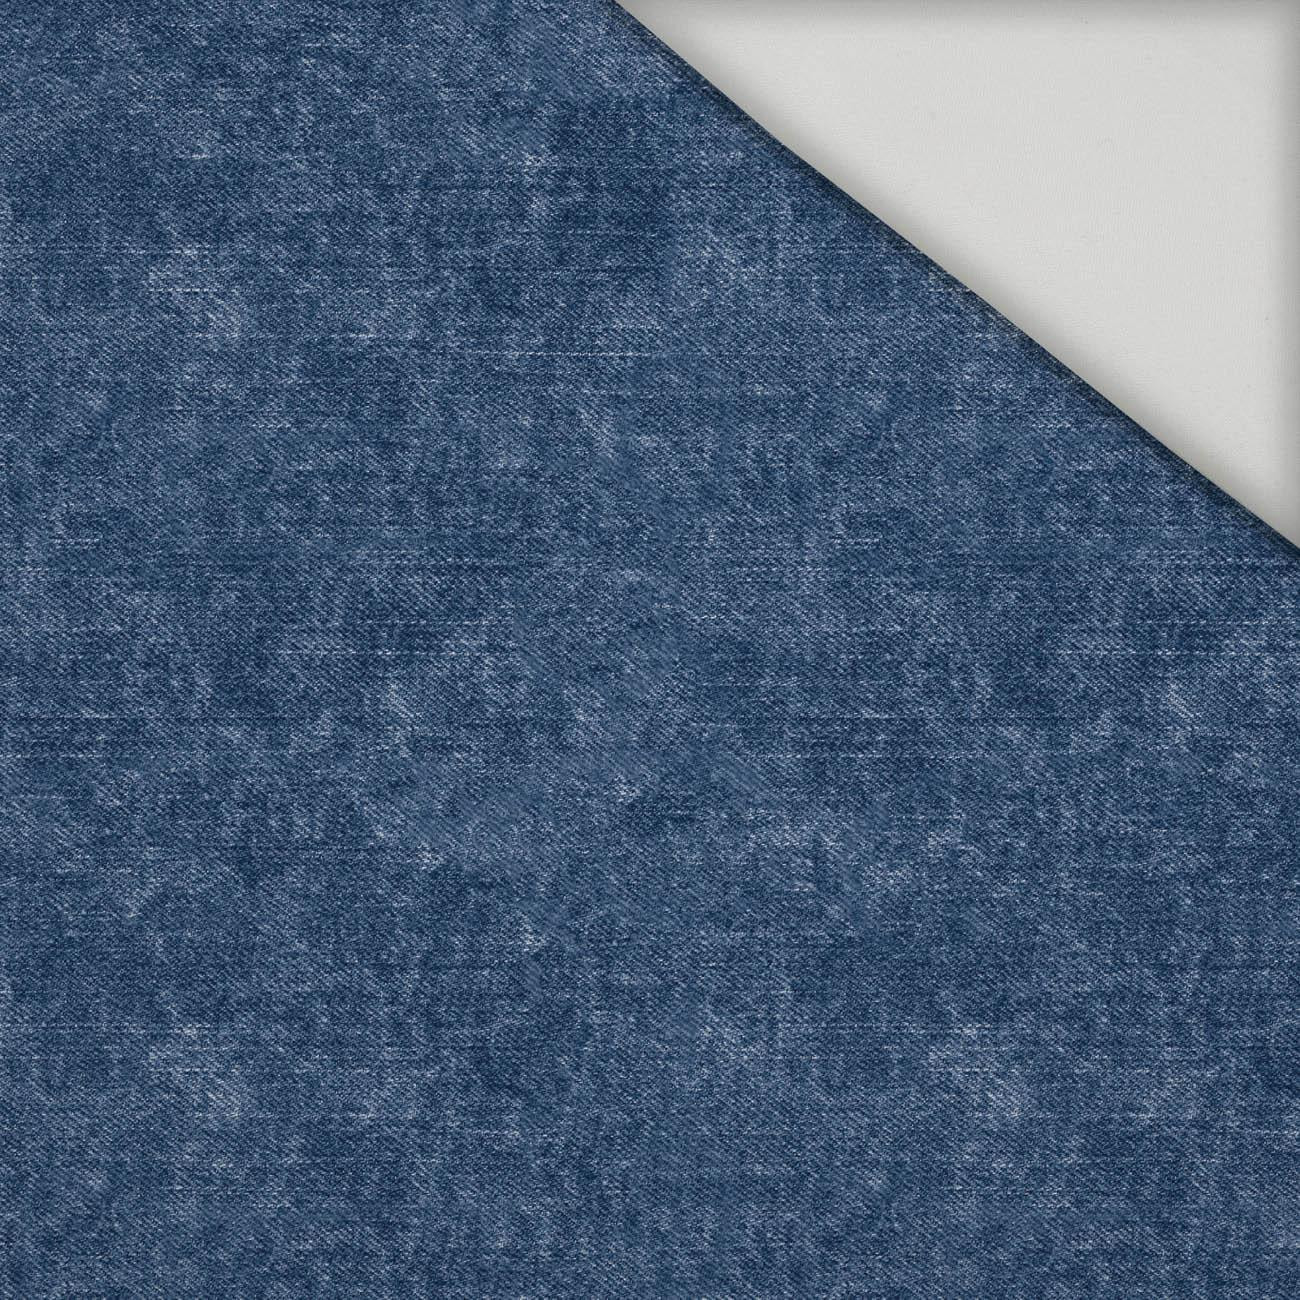 ACID WASH / DARK BLUE - quick-drying woven fabric